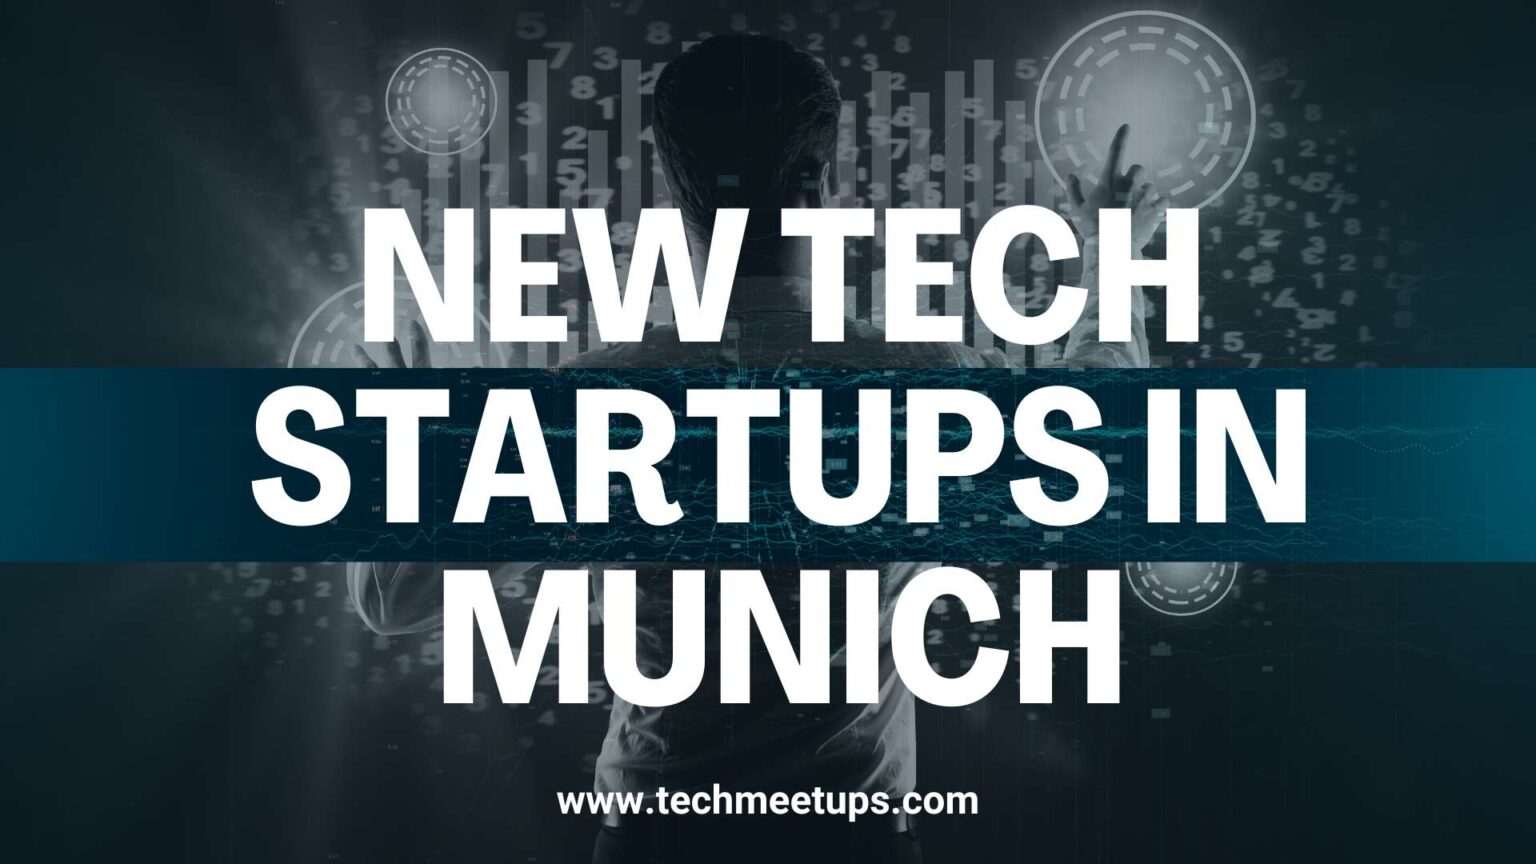 Spotlight on New Tech Startups in Munich